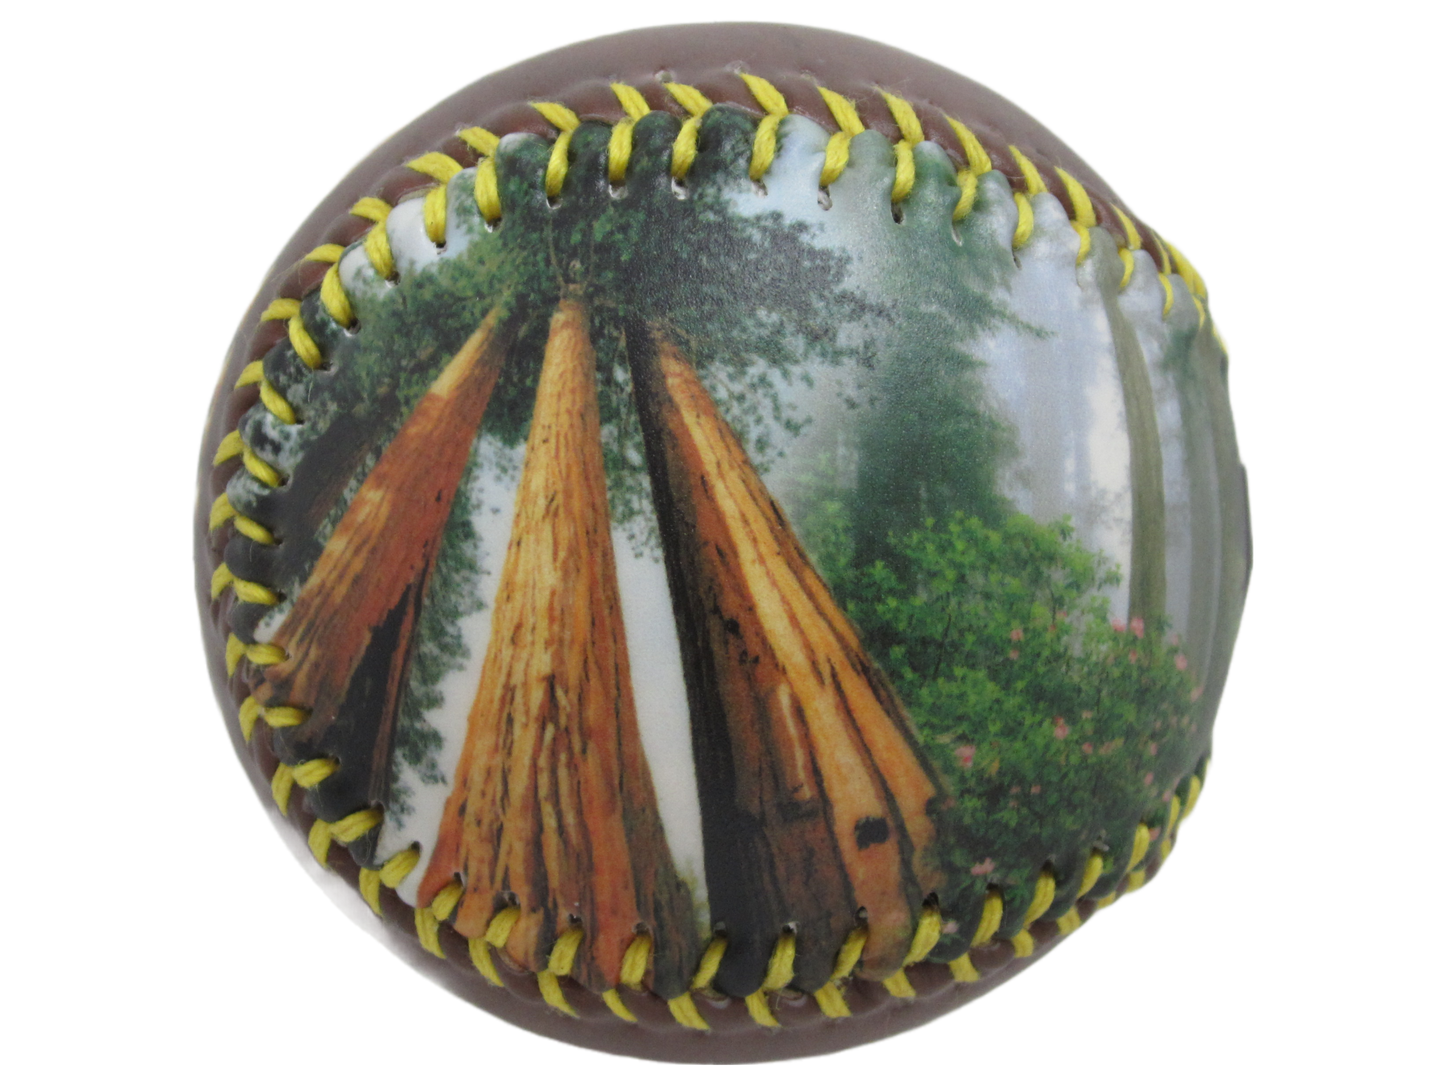 Redwood National & State Parks Baseball